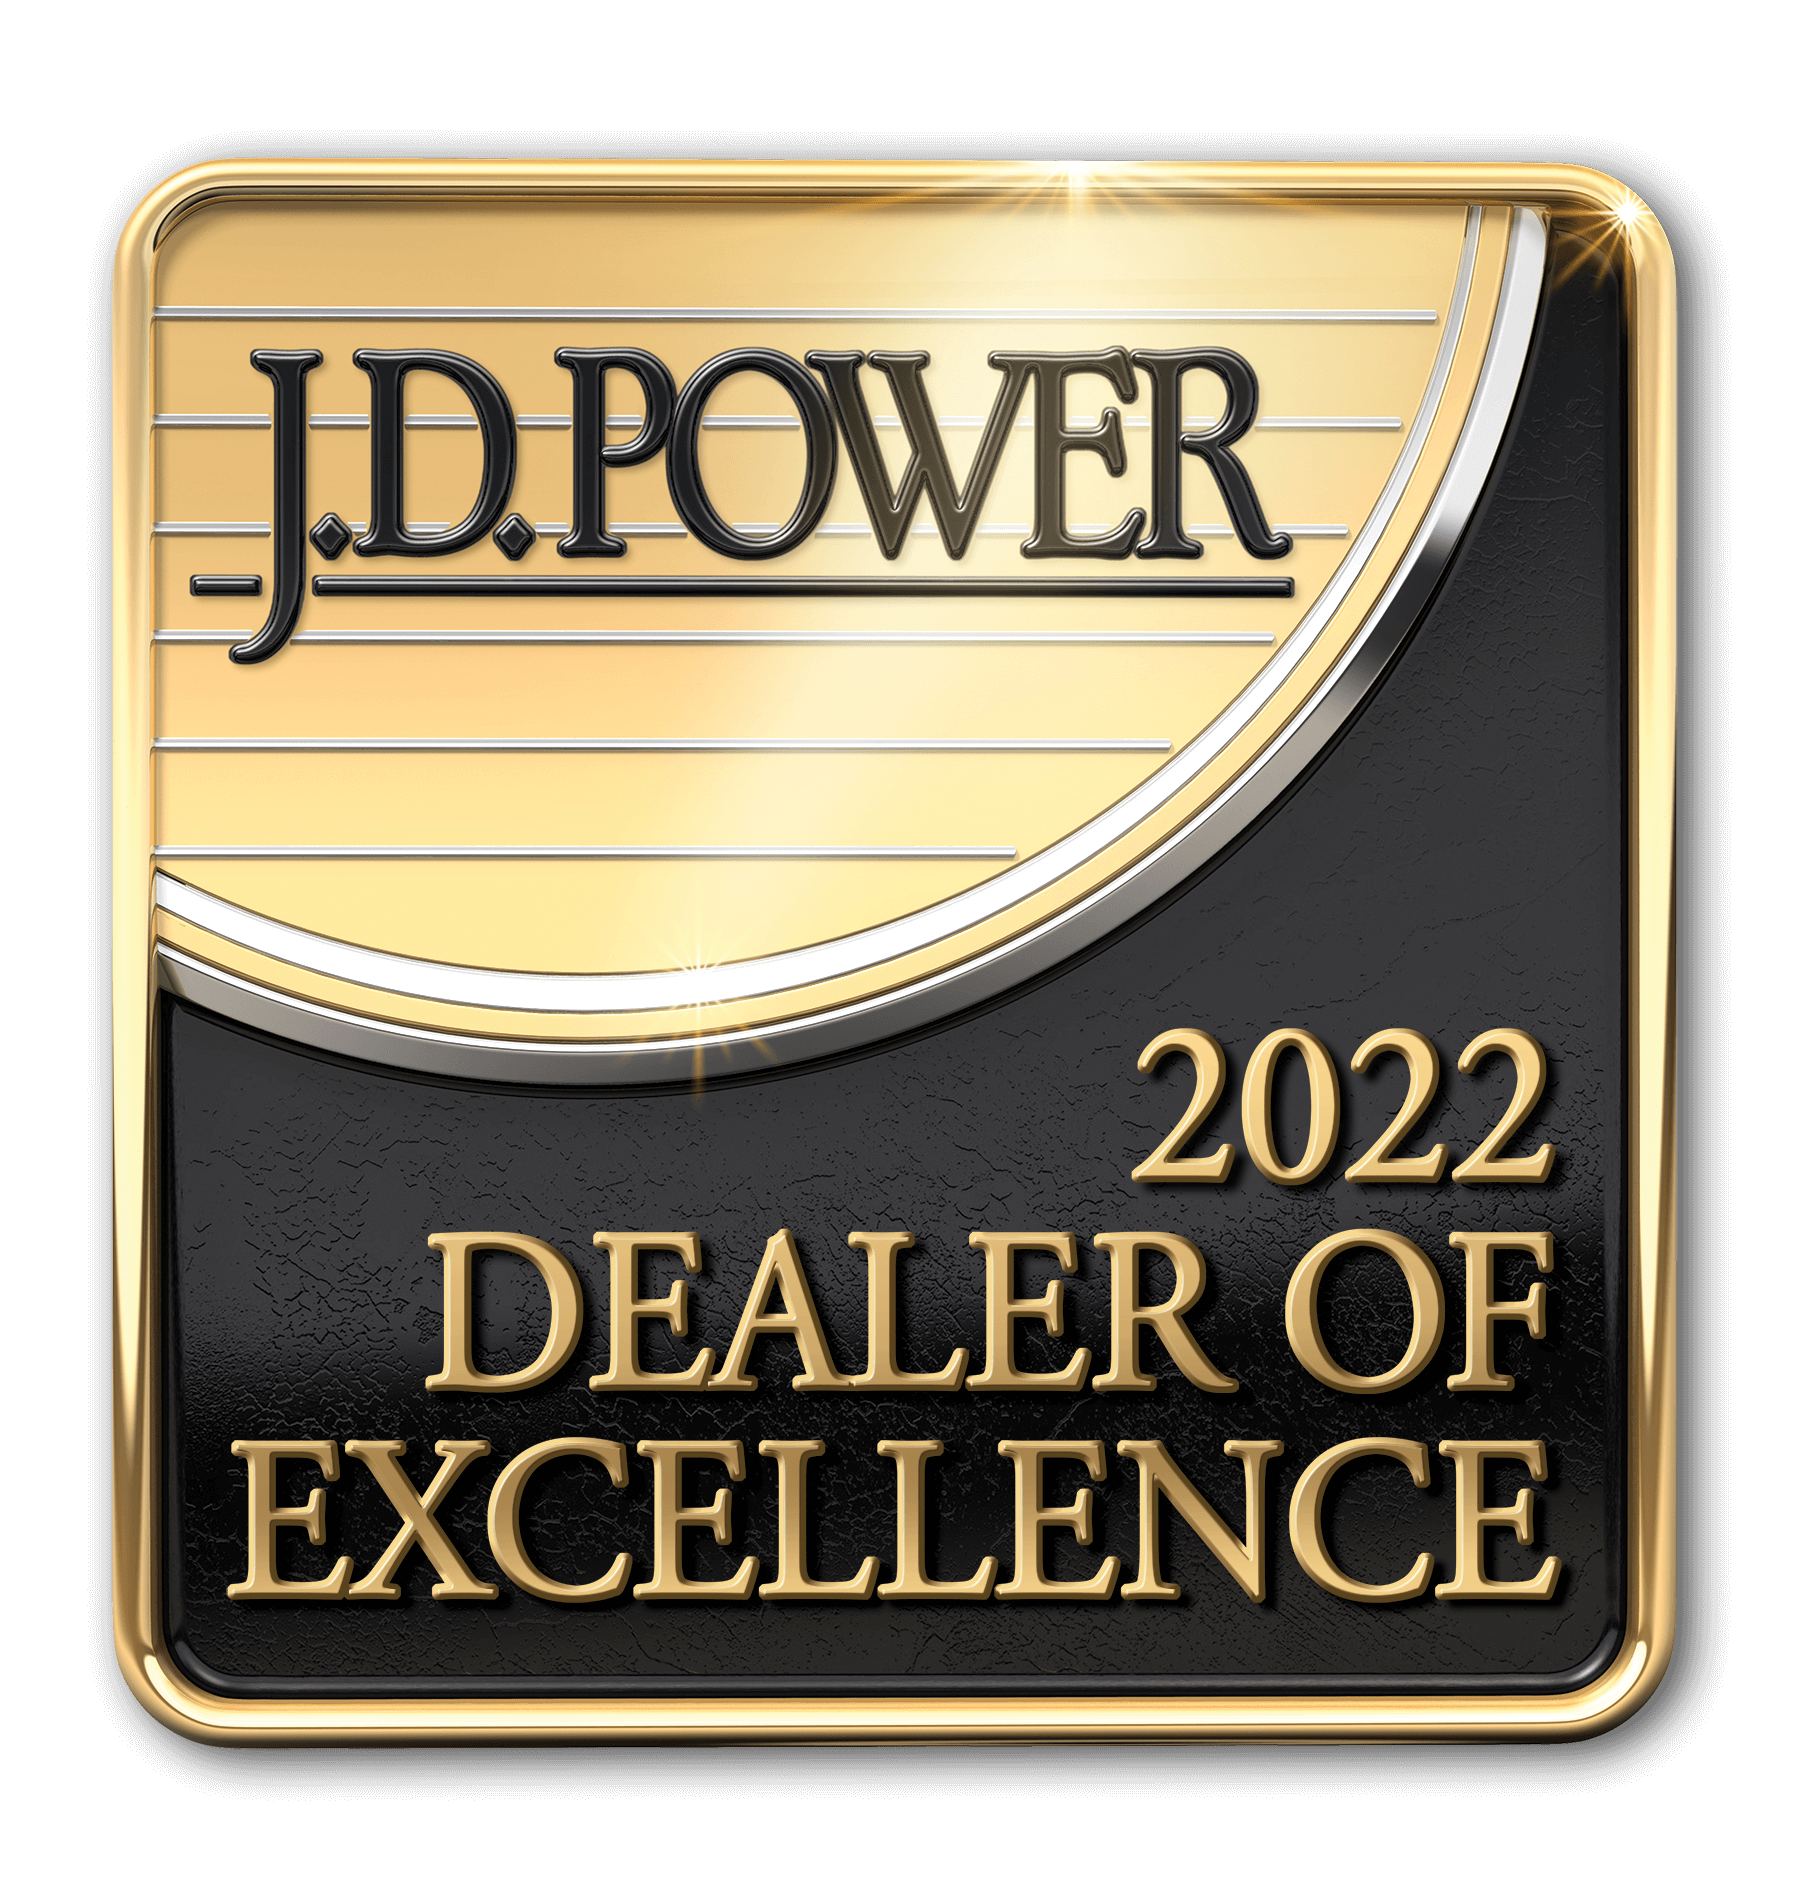 J.D. Power Dealer of Excellence 2020